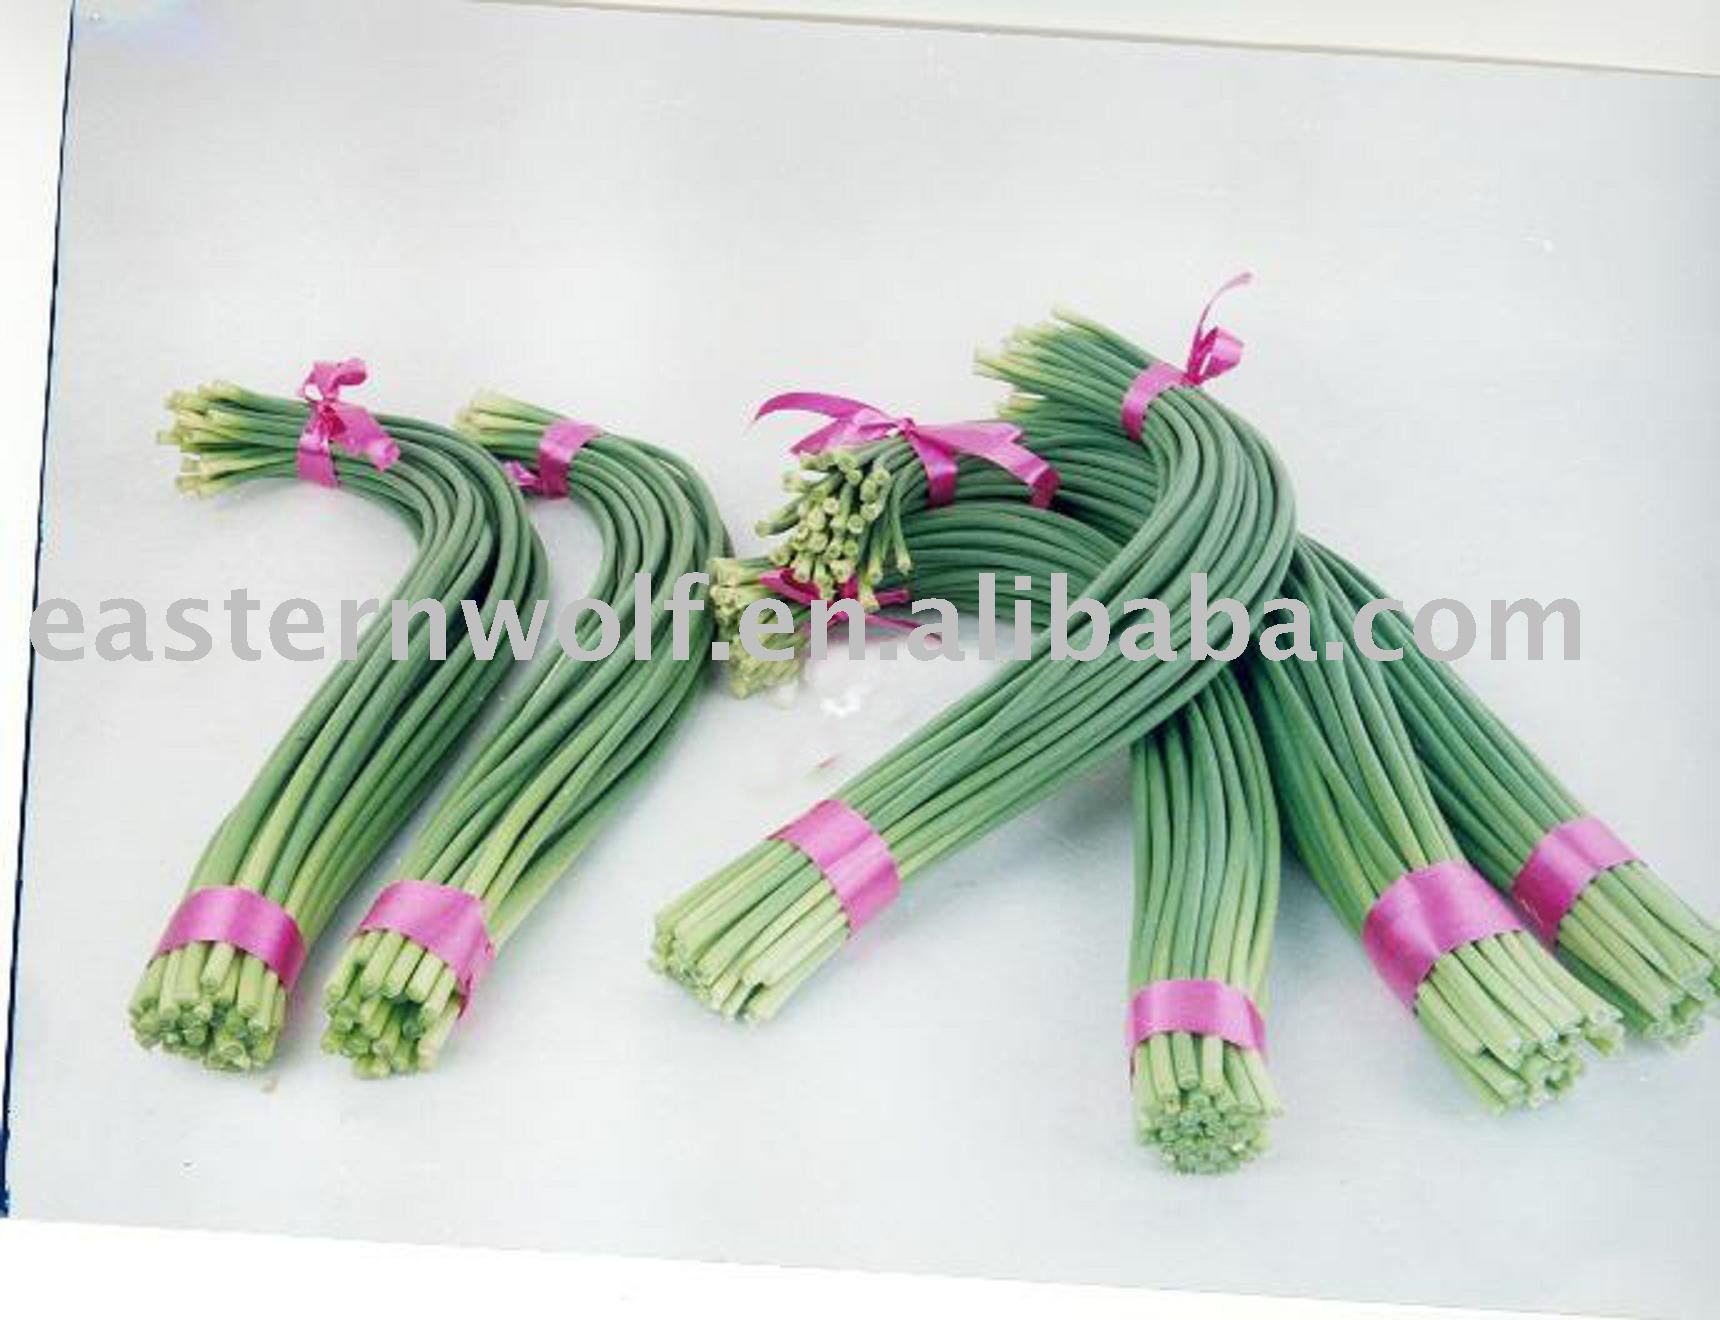 Chinese Fresh Garlic Stem of 2010 New Crop in Carton